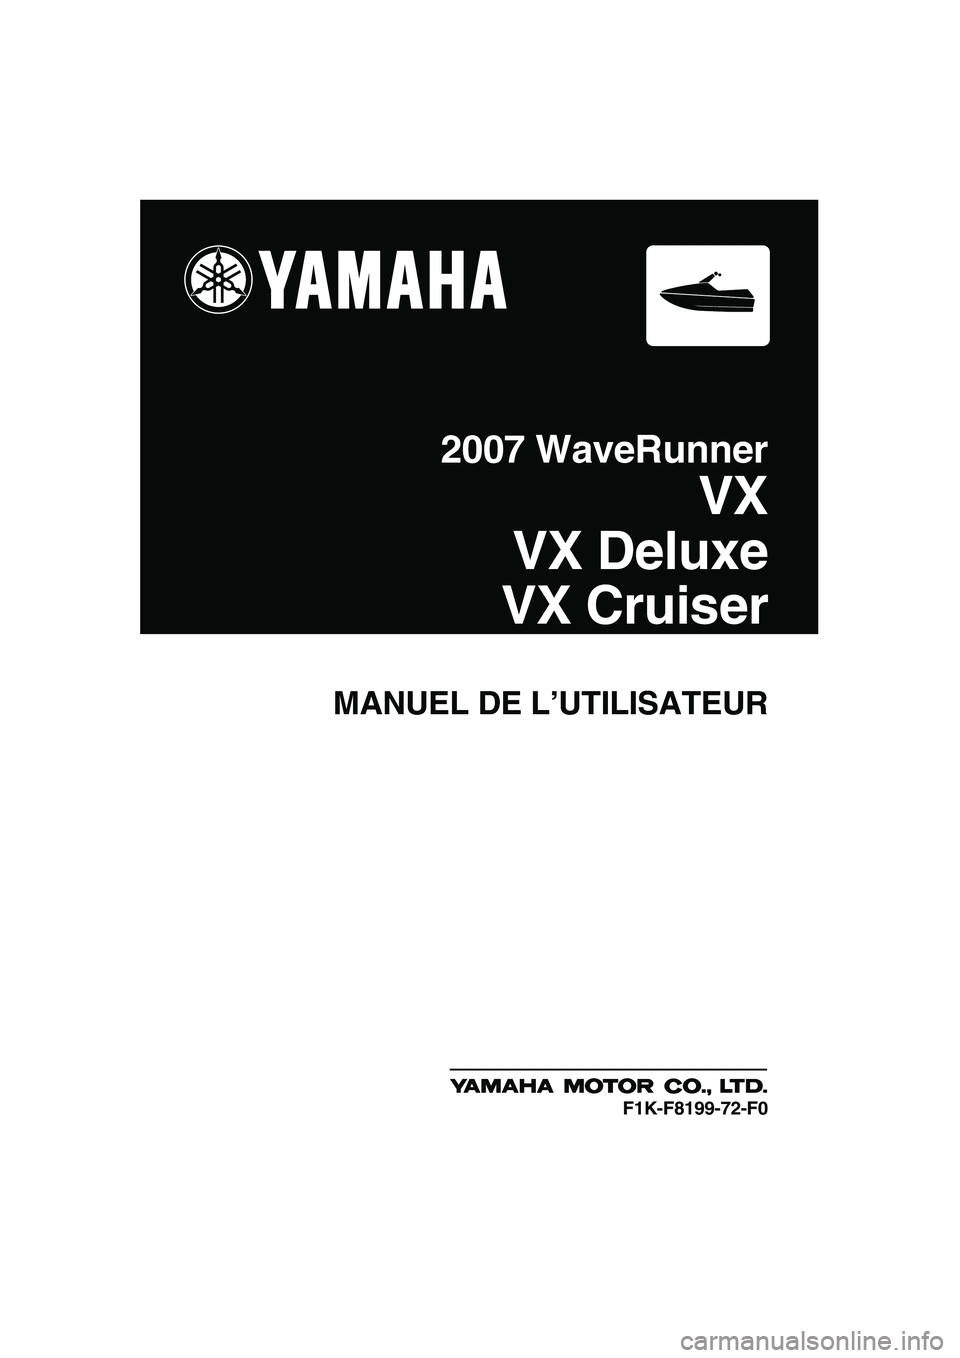 YAMAHA VX DELUXE 2007  Notices Demploi (in French) MANUEL DE L’UTILISATEUR
2007 WaveRunner
VX
VX Deluxe
VX Cruiser
F1K-F8199-72-F0
UF1K72F0.book  Page 1  Wednesday, August 2, 2006  5:56 PM 